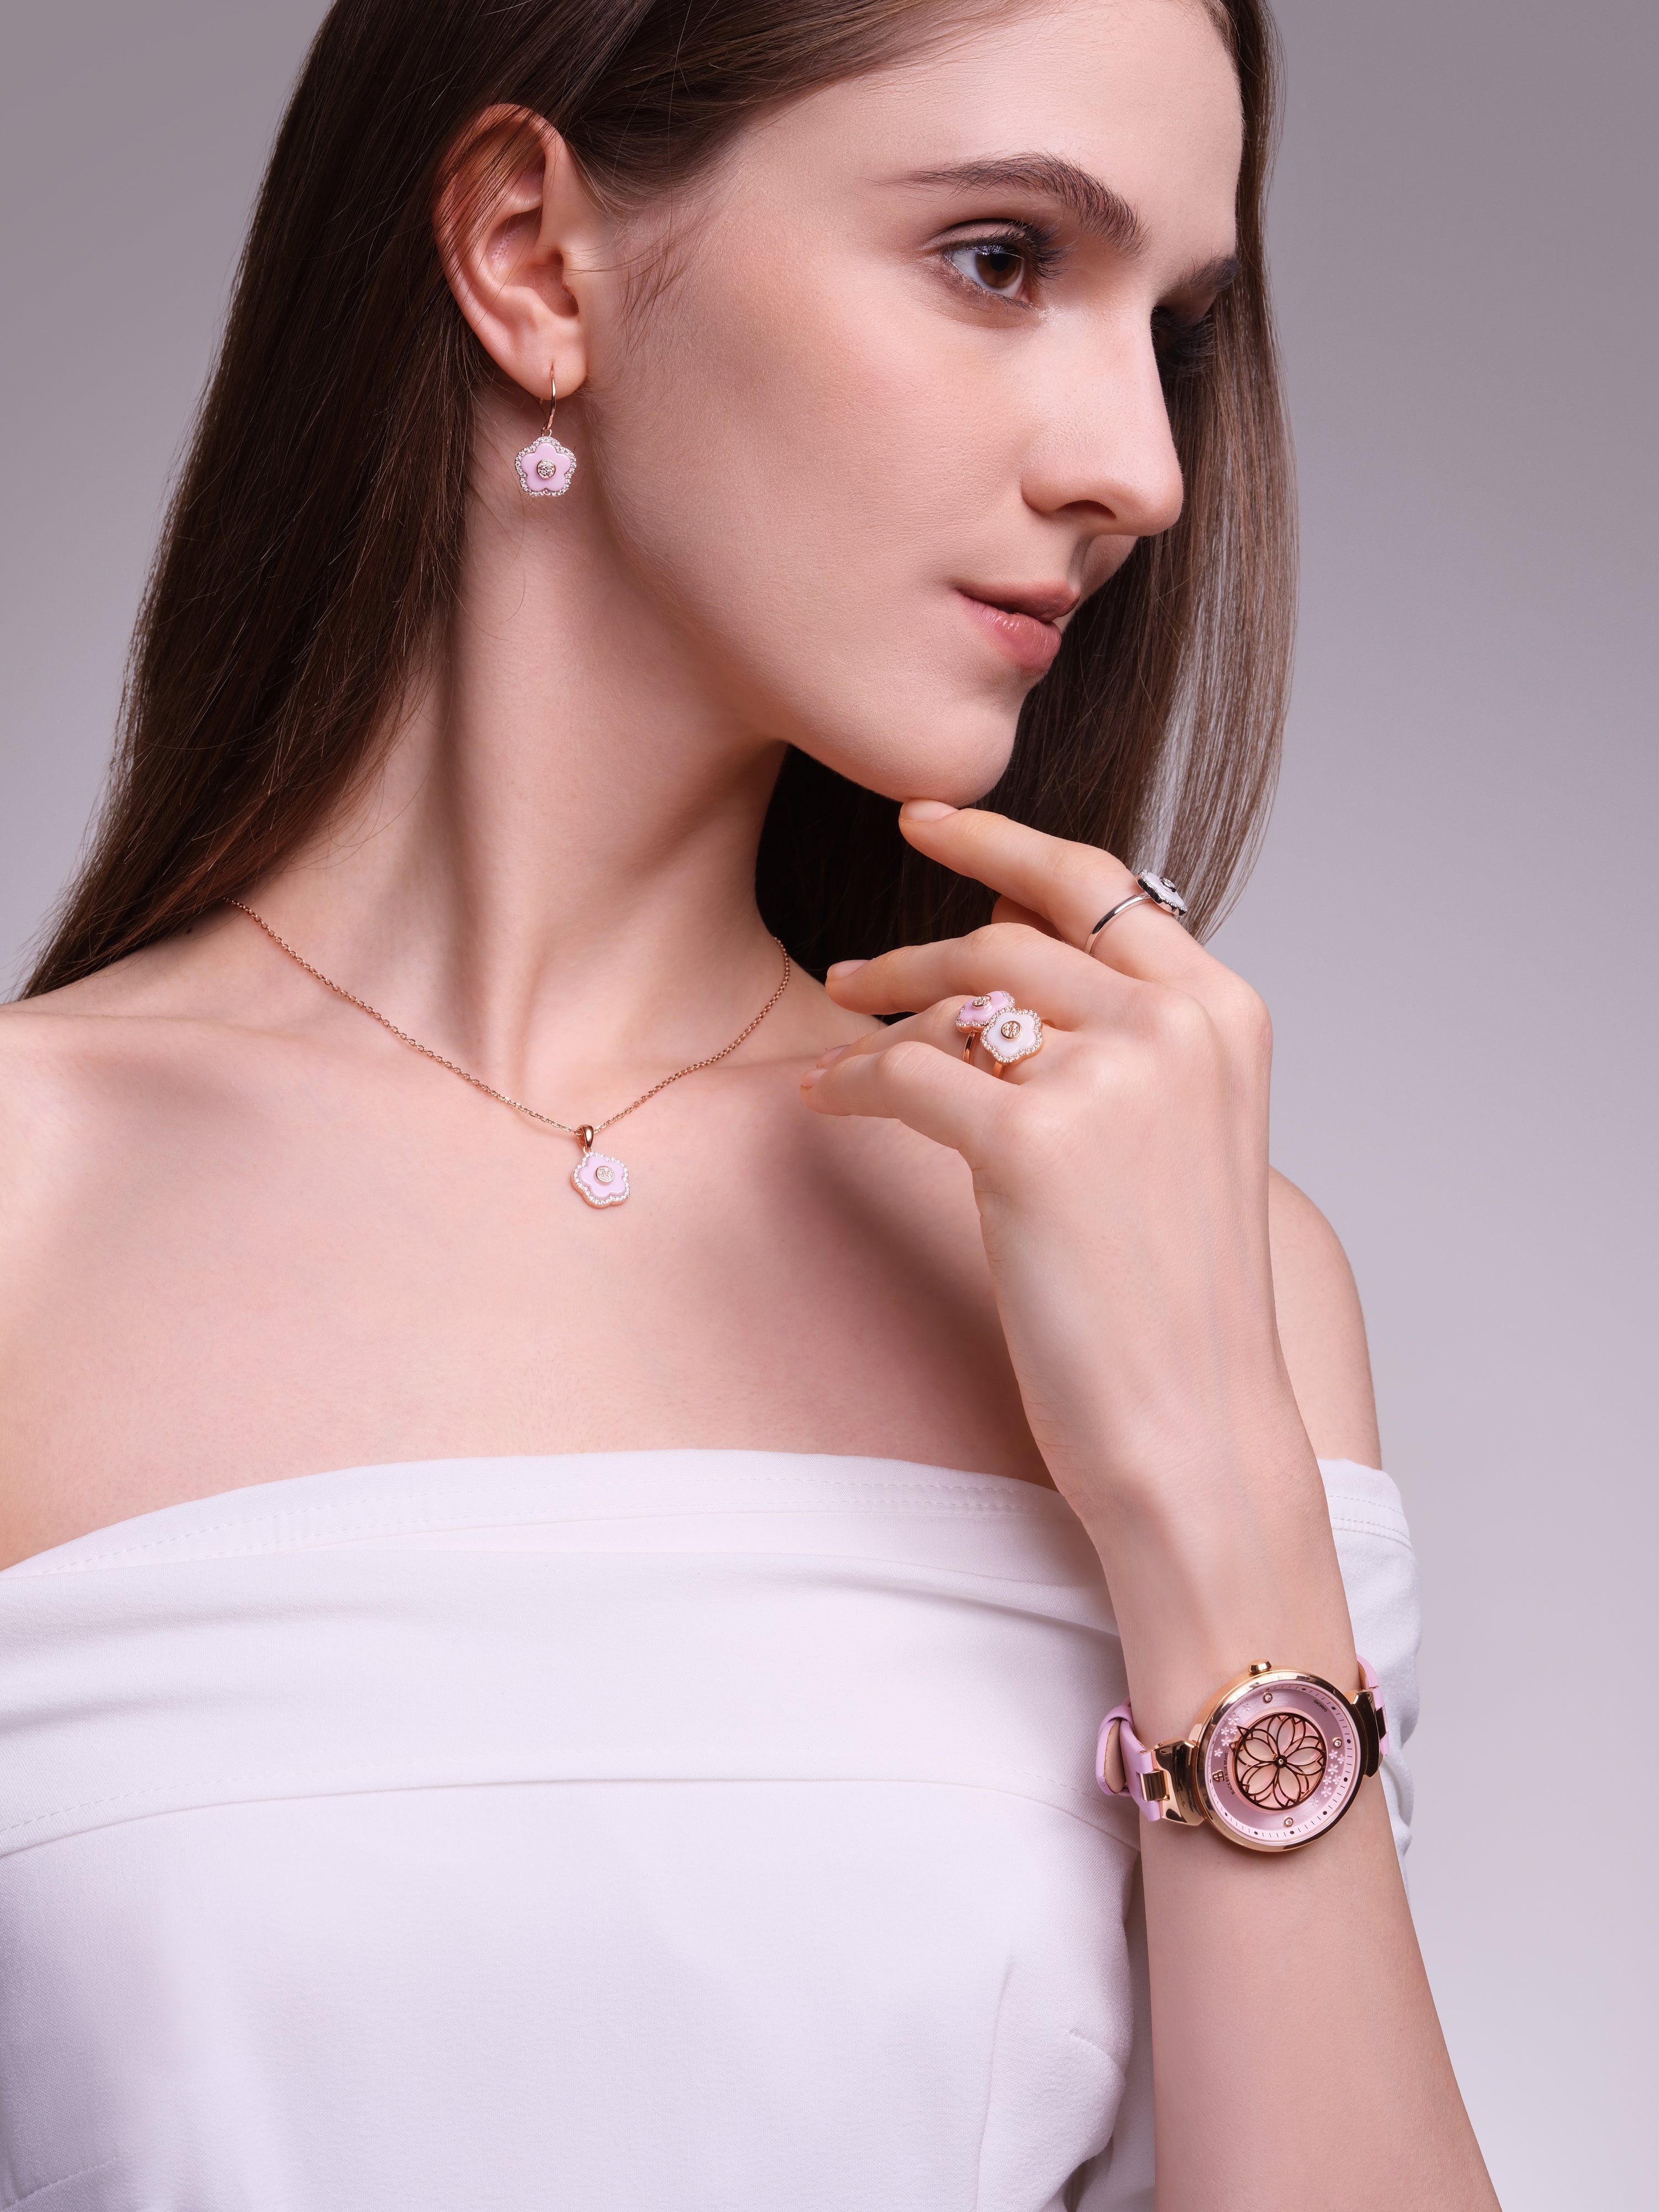 Pink Cherry Blossom Watch & Flower Ceramic Earrings